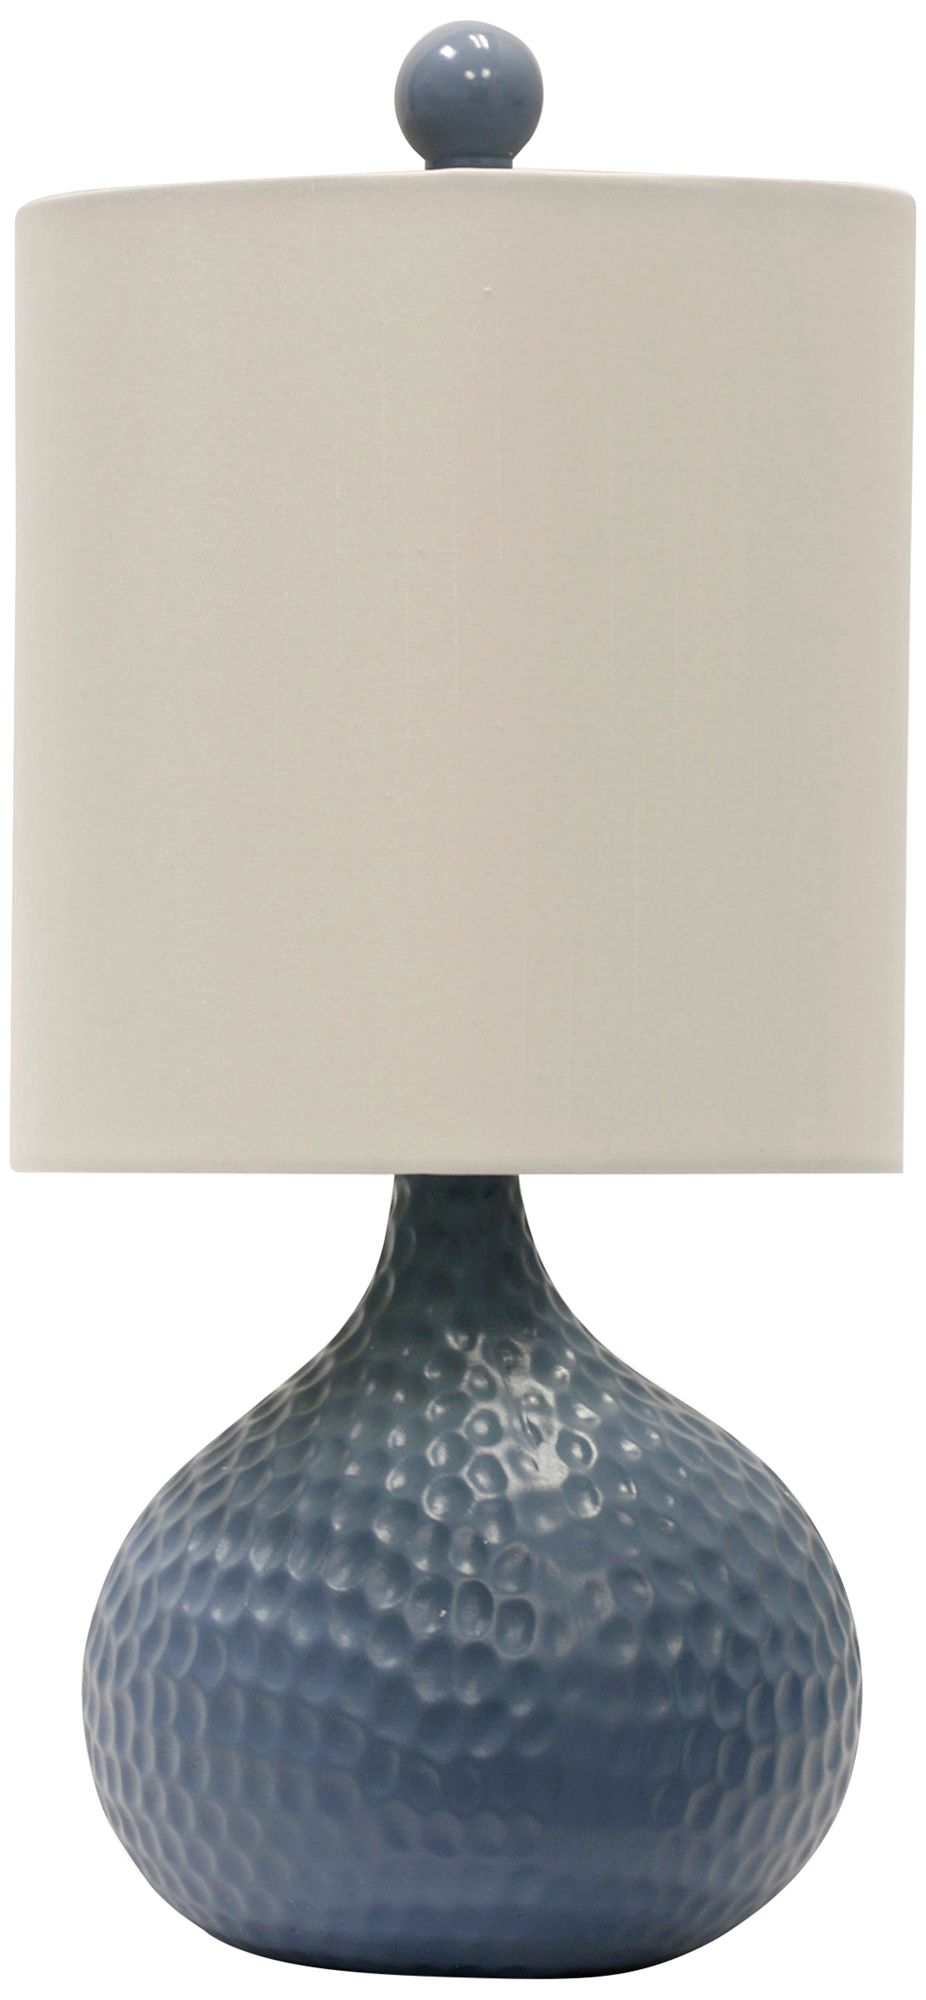 Ceramic Table Lamp - Blue Finish - White Hardback Fabric Shade